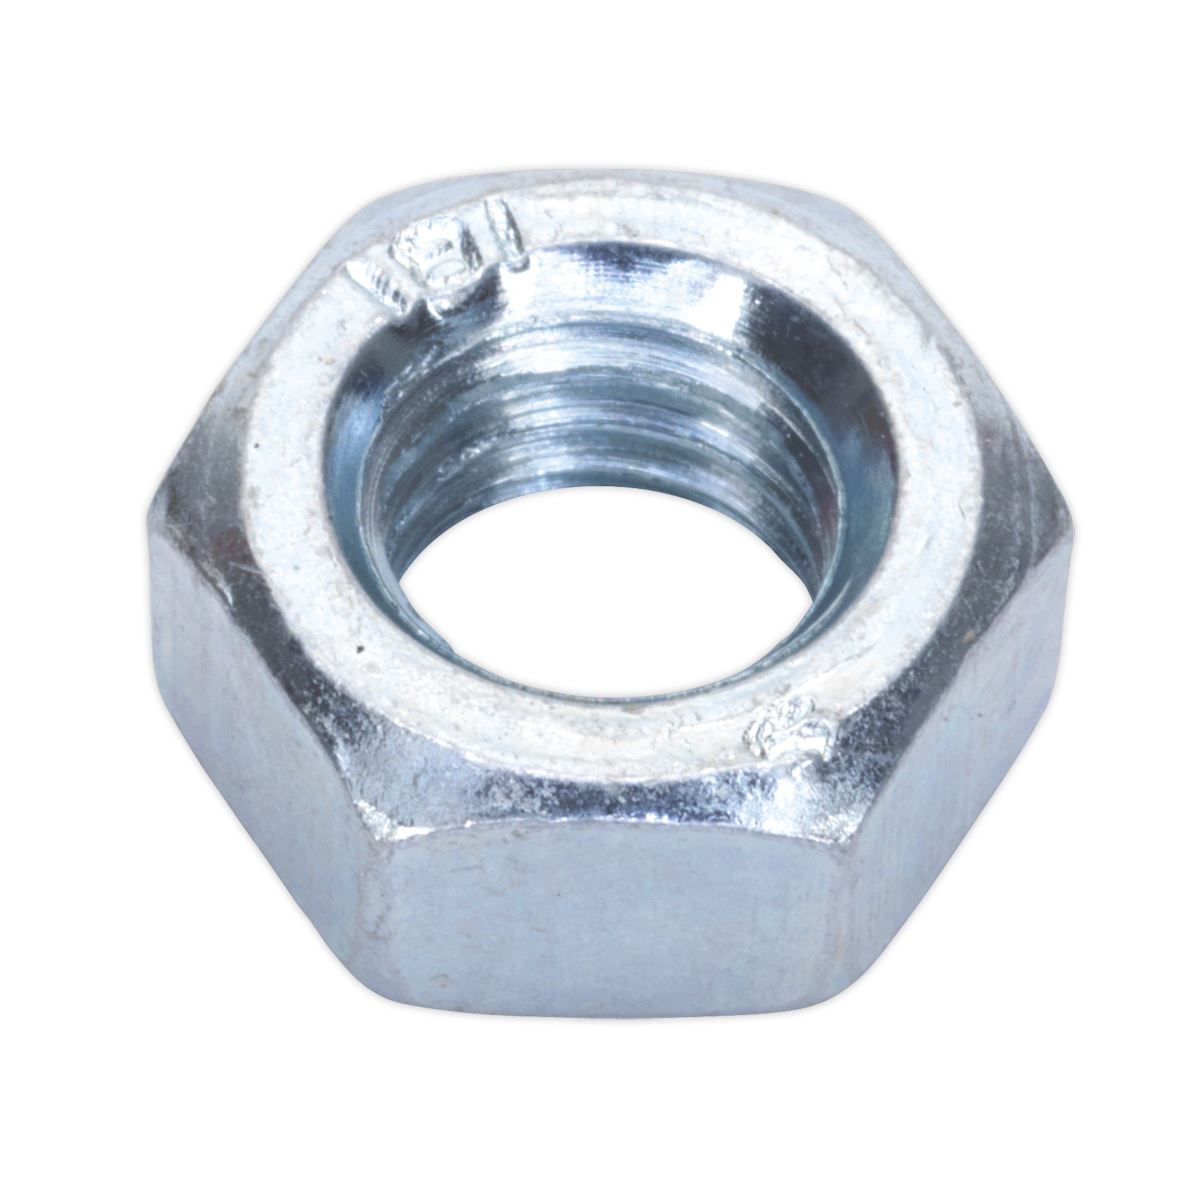 Sealey Steel Nut DIN 934 - M8 - Pack of 100